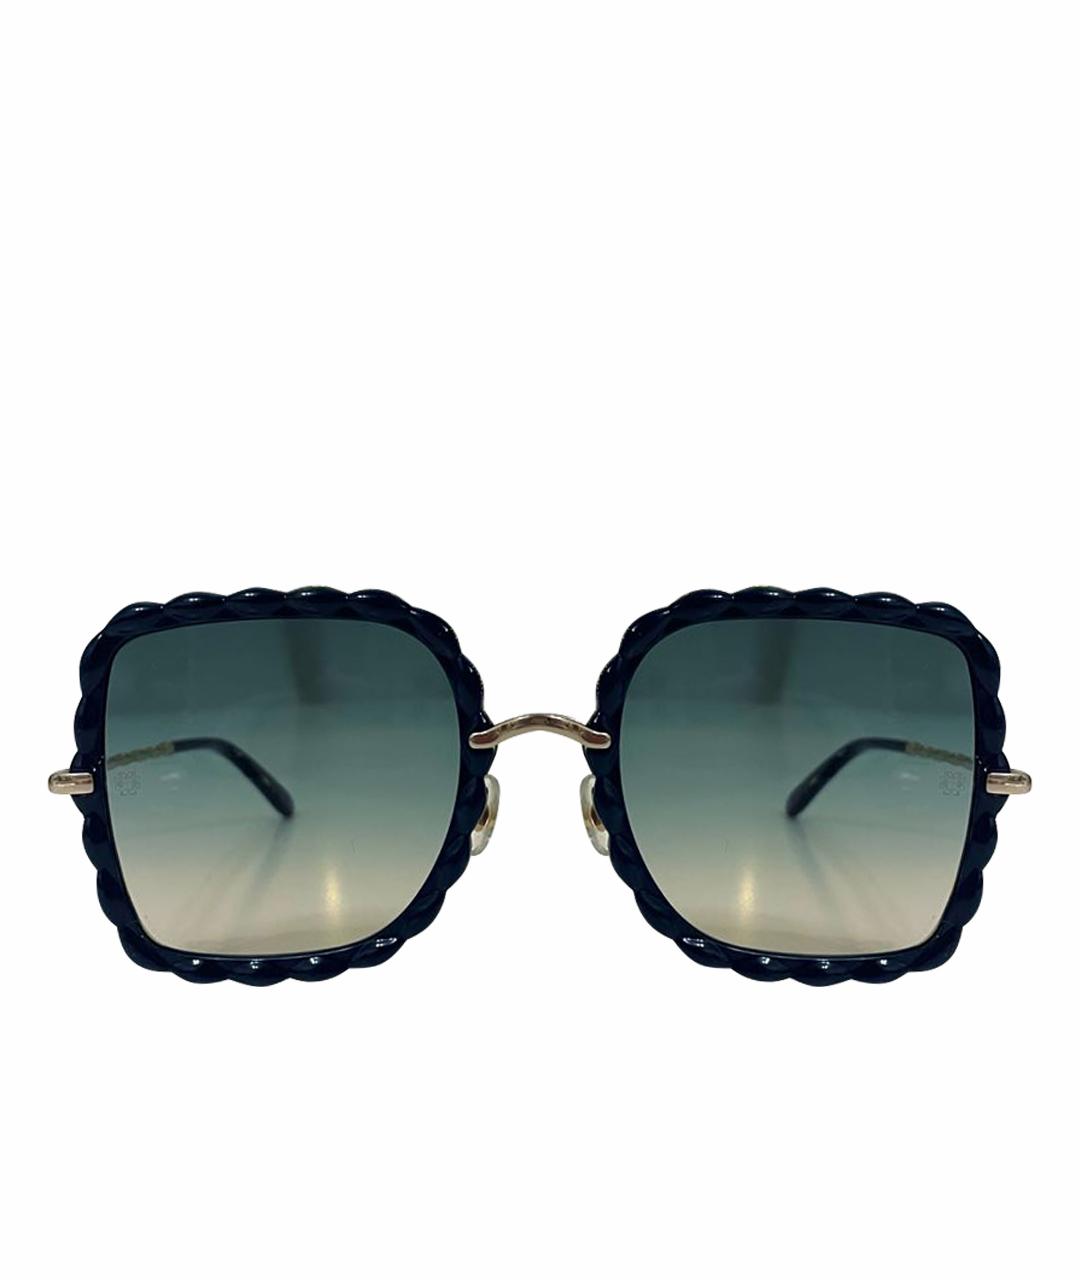 ELIE SAAB Темно-синие пластиковые солнцезащитные очки, фото 1